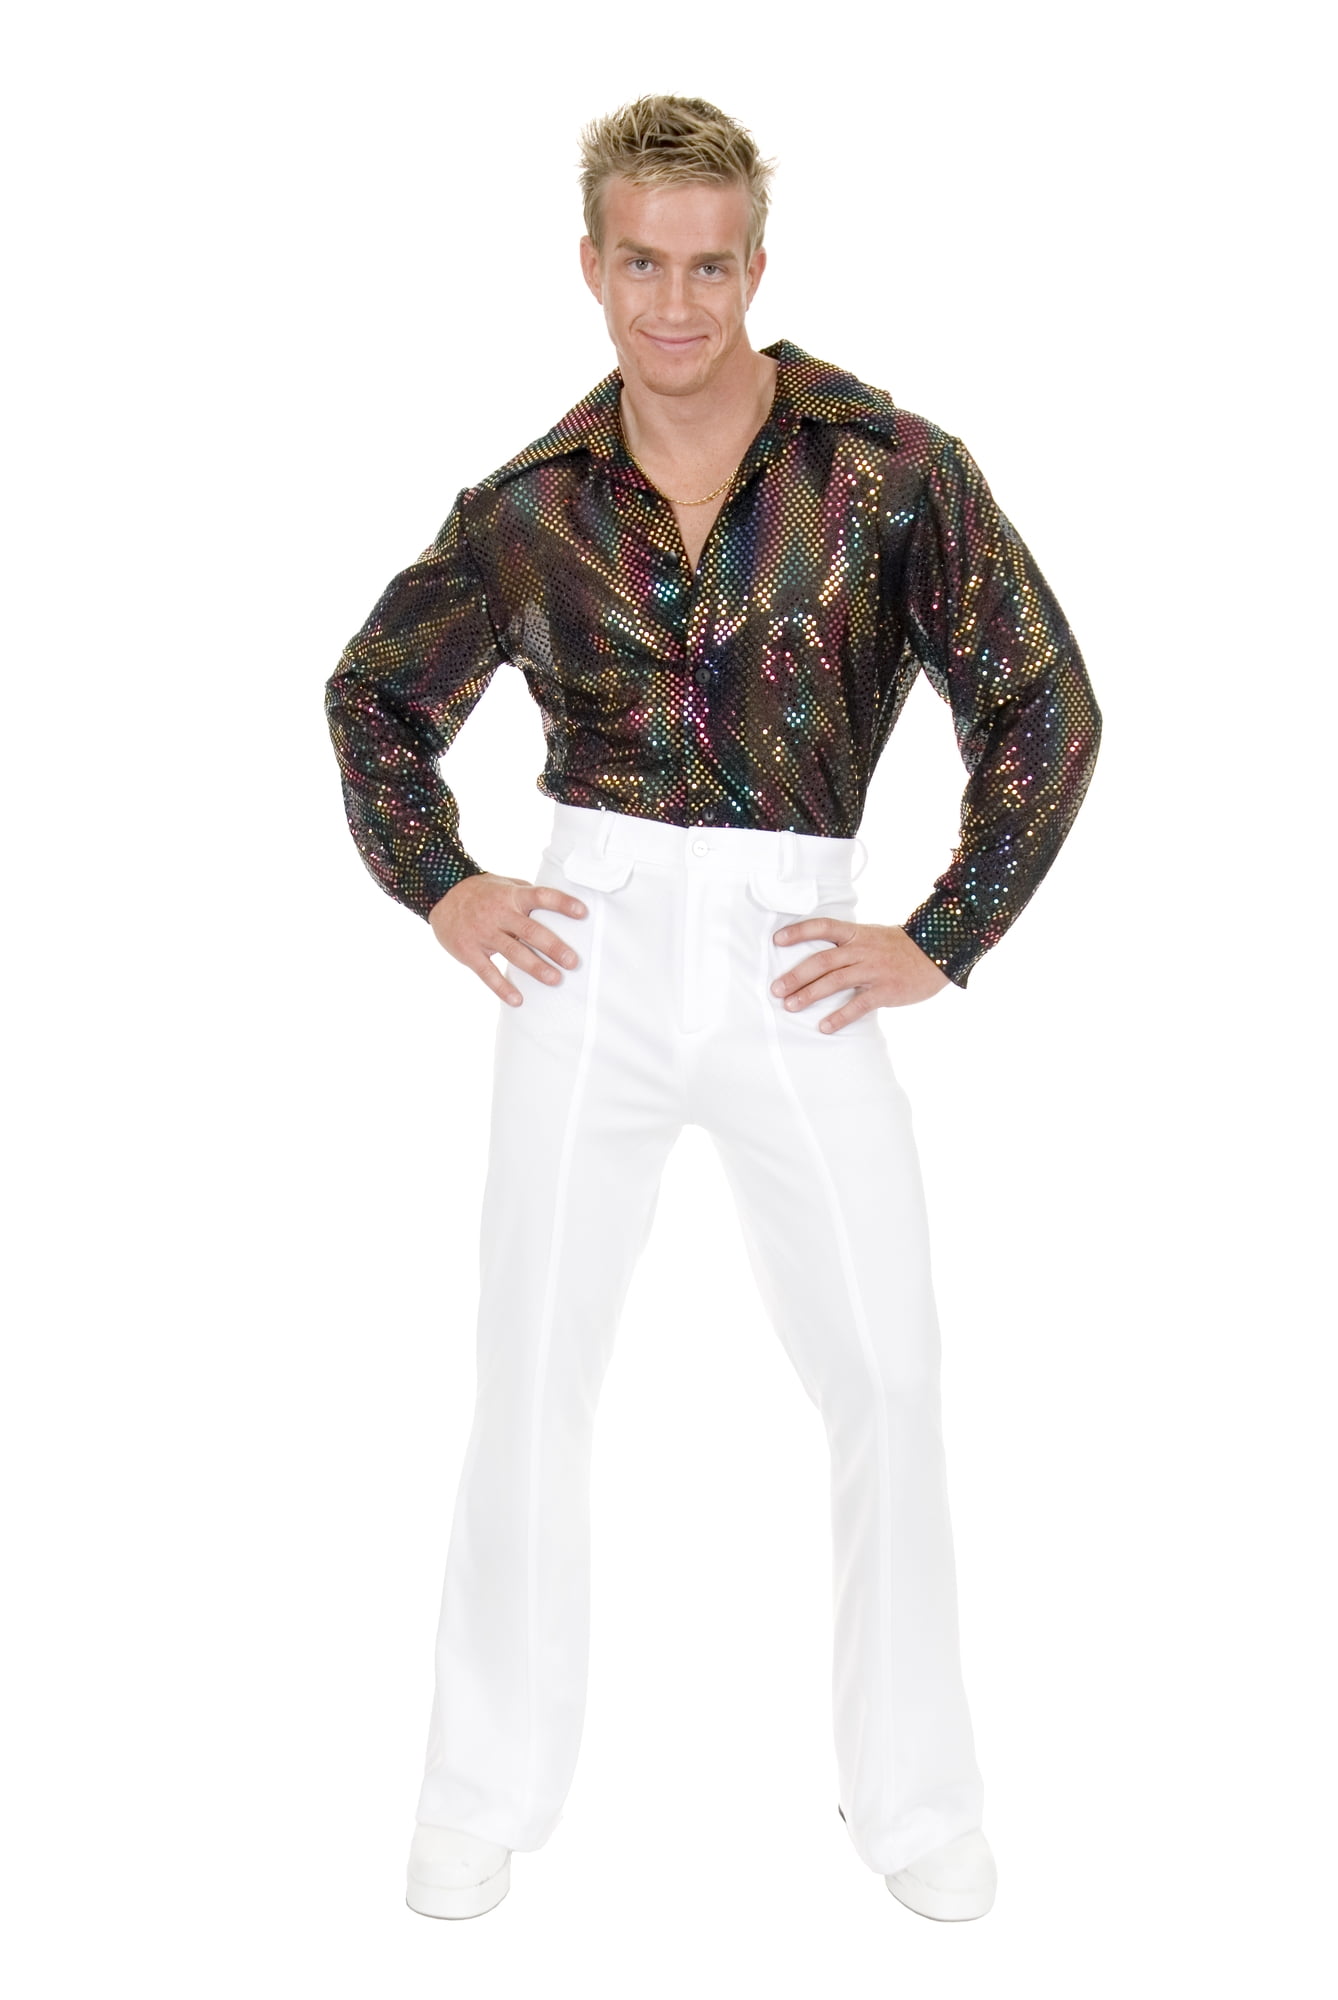 Mens Sequin Disco Shirt Halloween Costume - Walmart.com